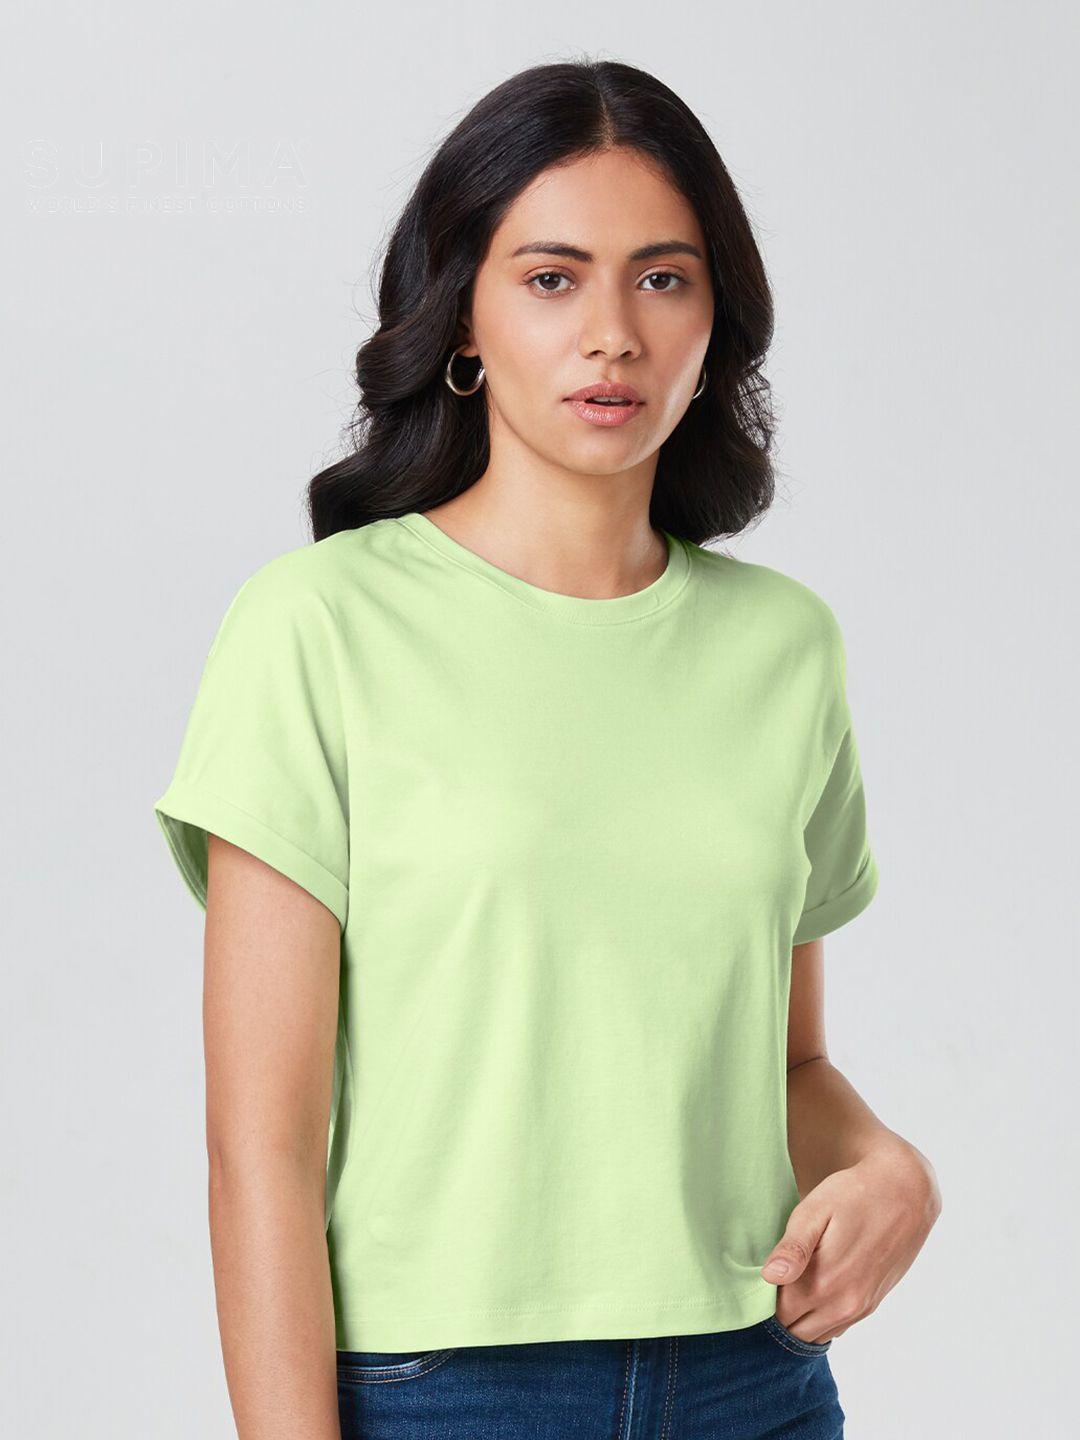 the souled store women green applique t-shirt